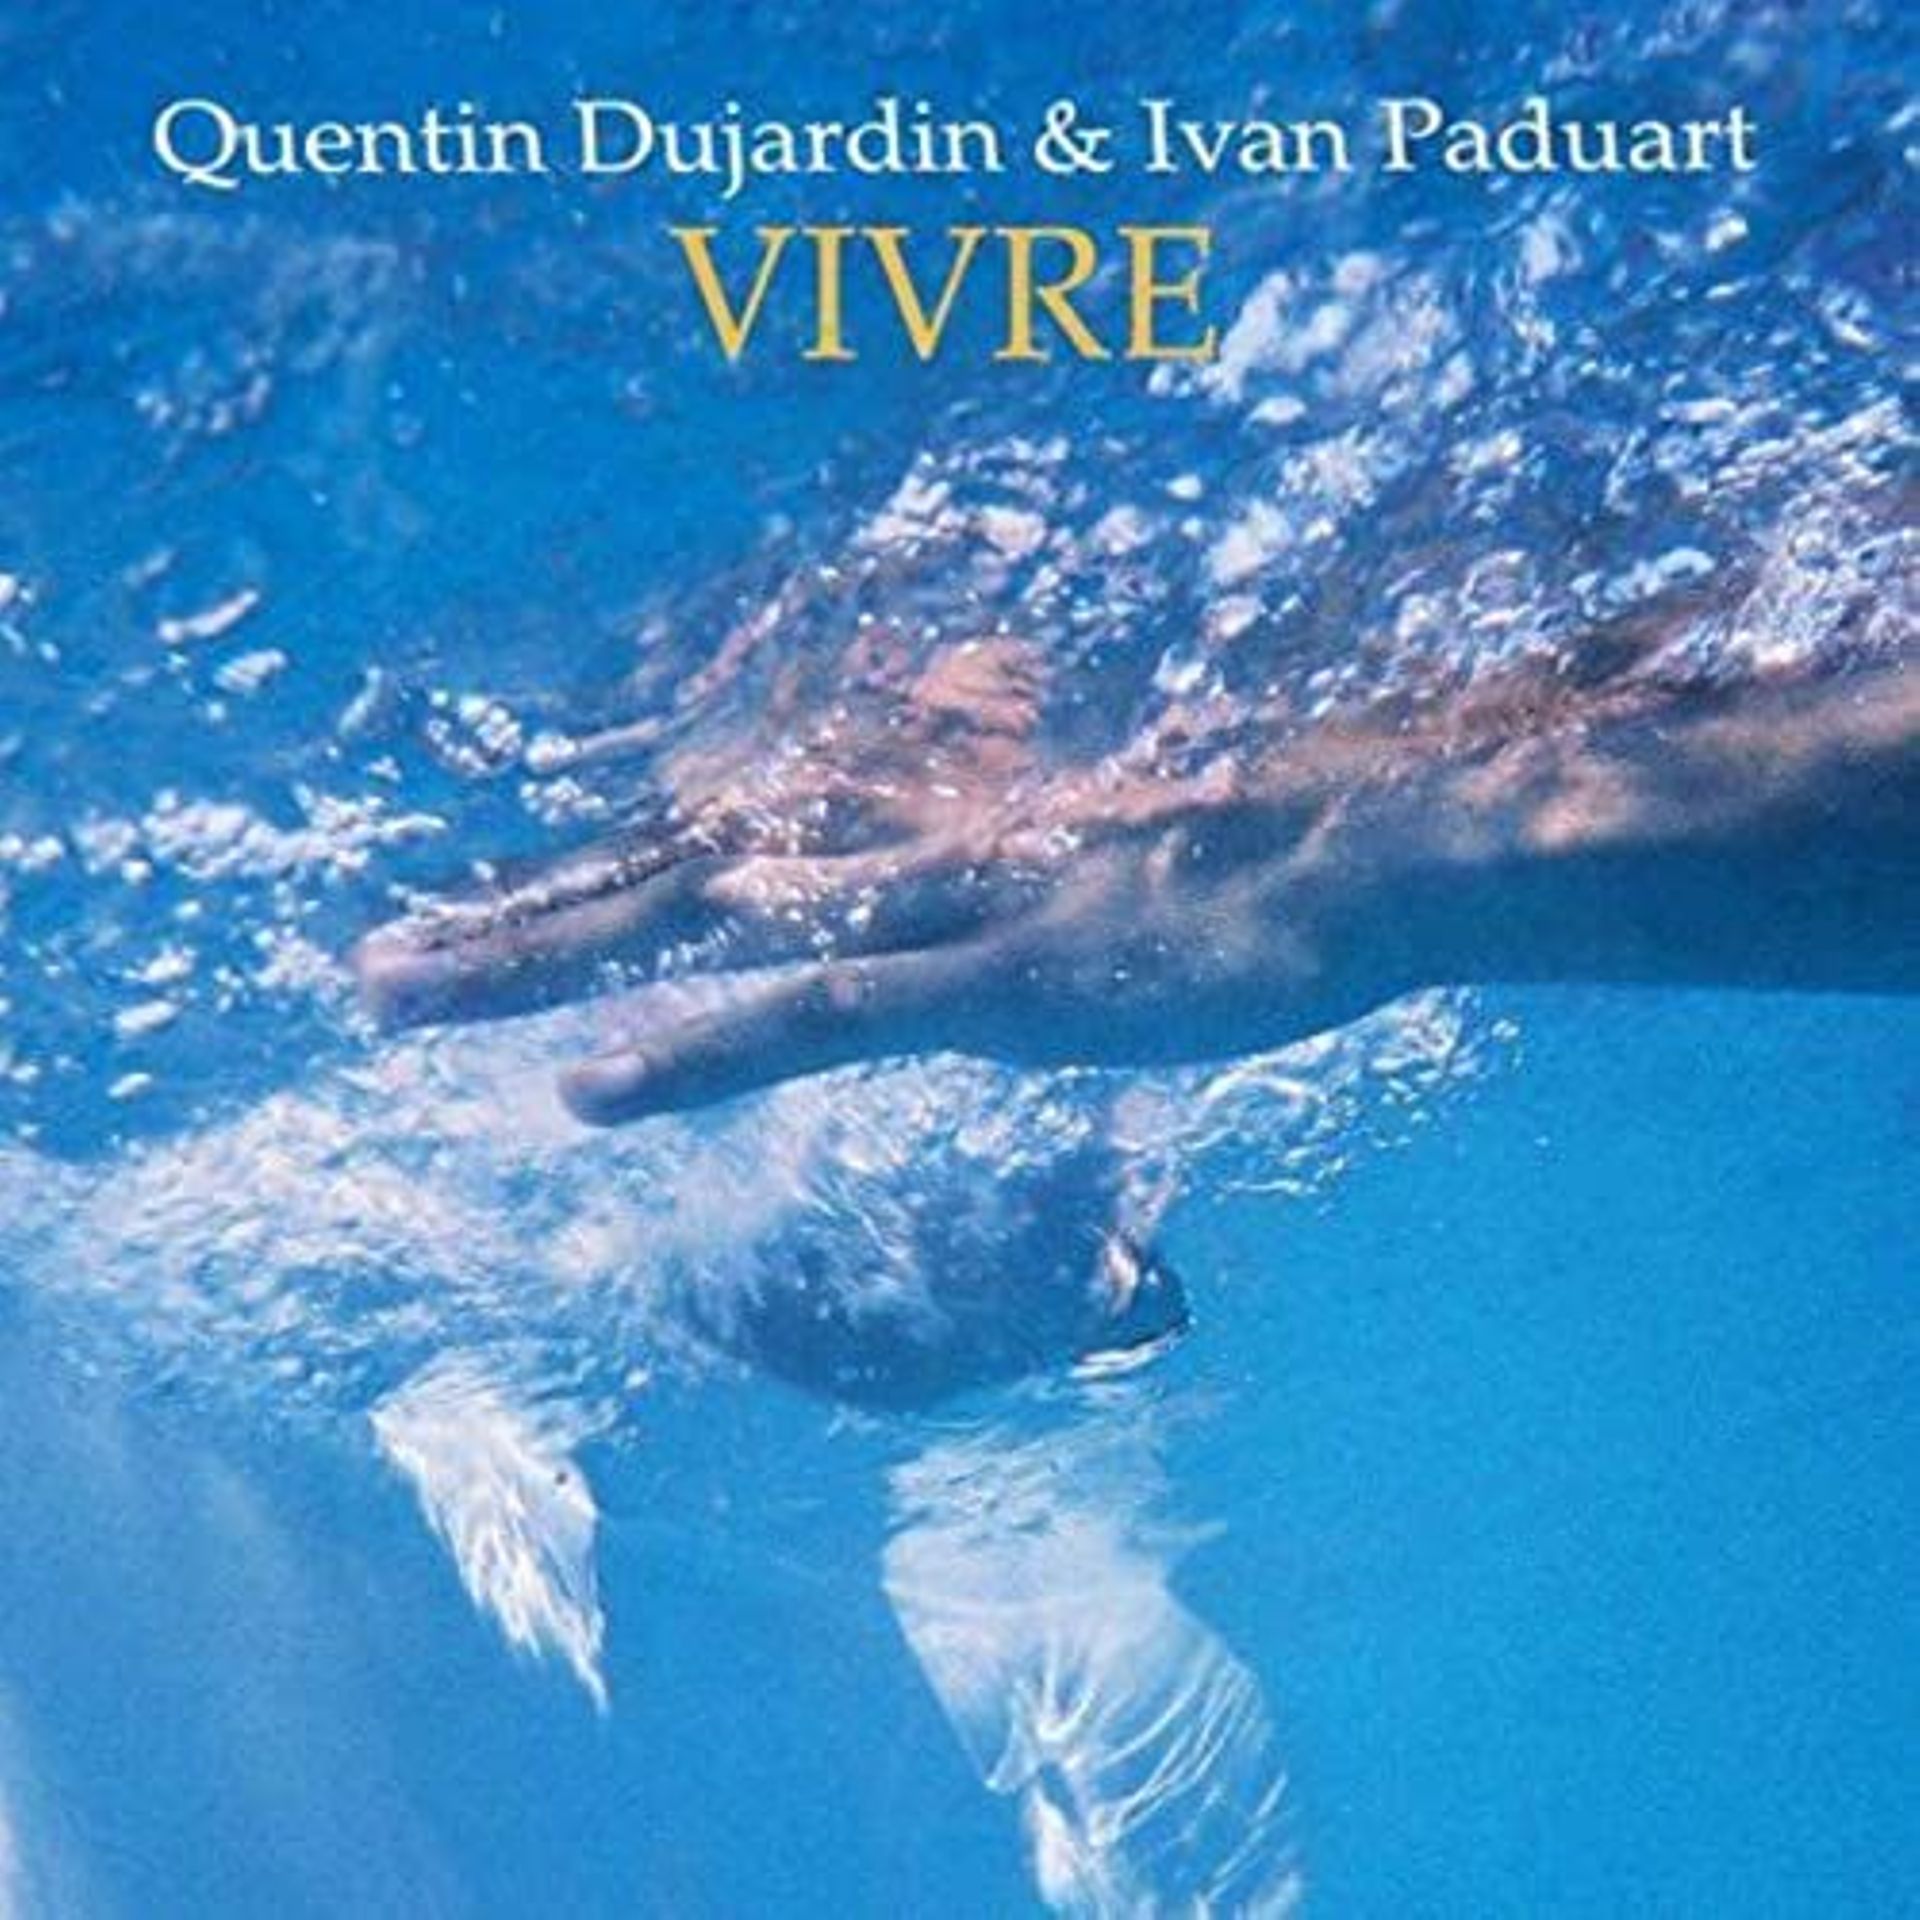 Quentin Dujardin & Ivan Paduart : "Vivre" (2005) 